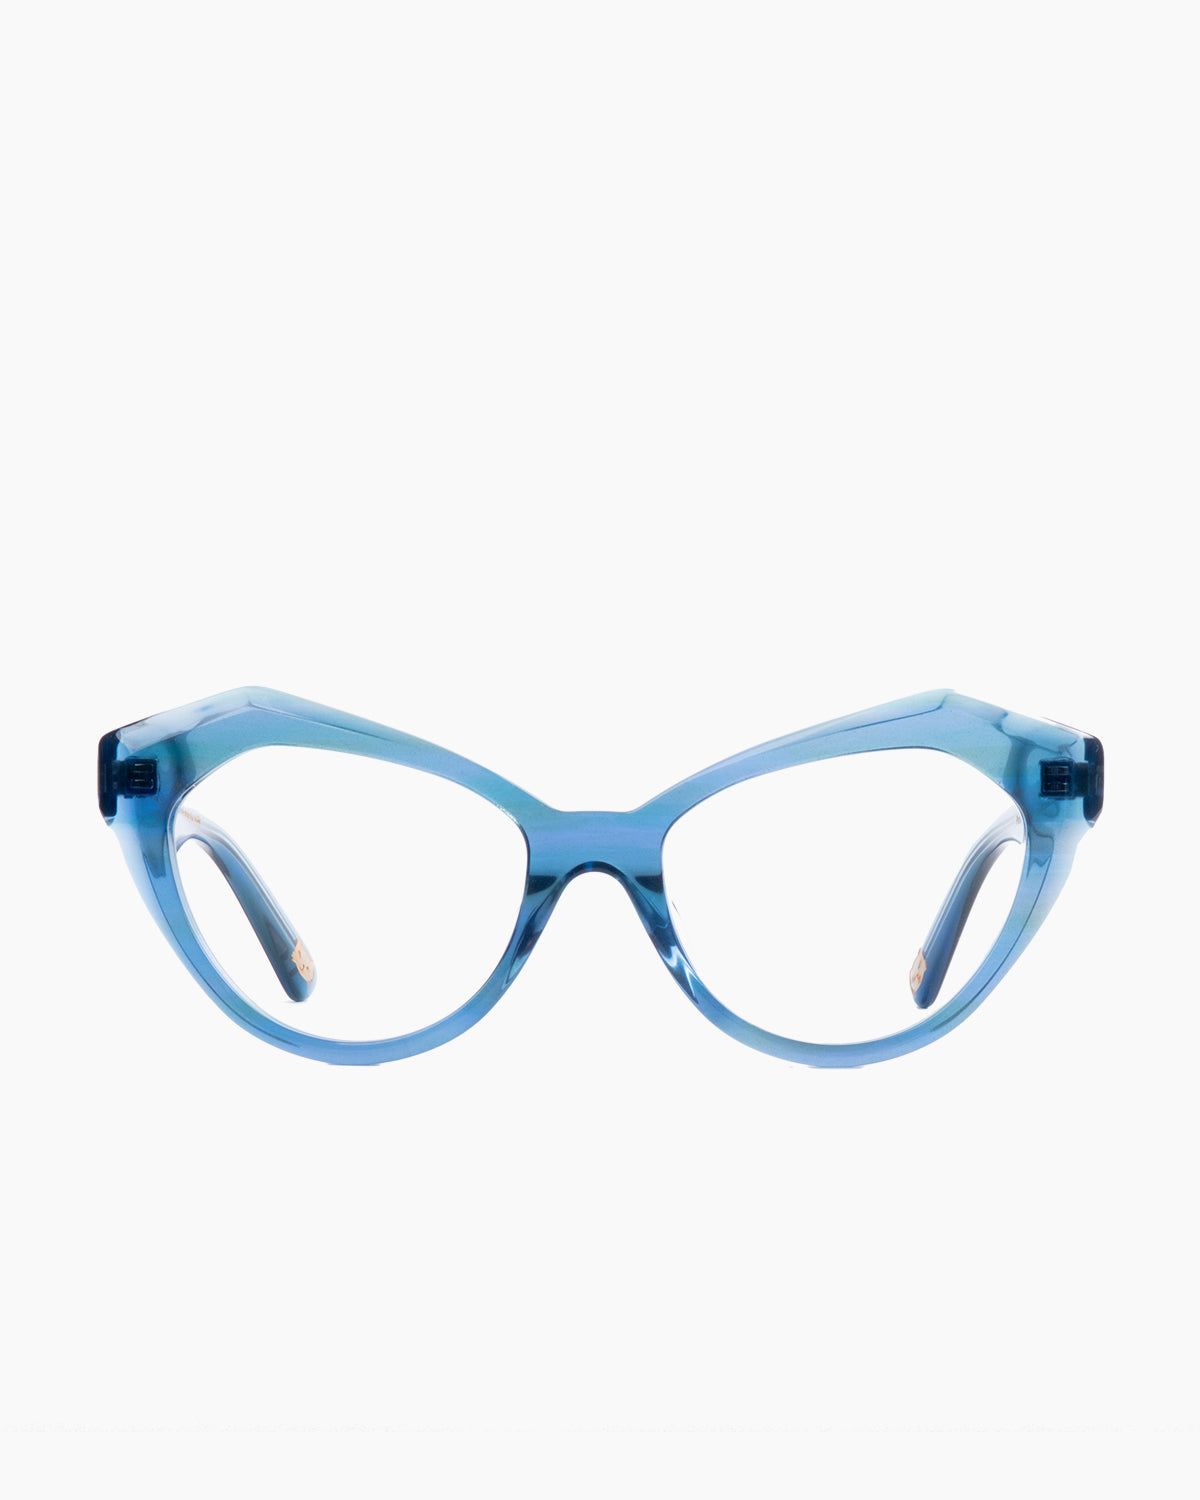 Spectacleeyeworks - Ayalah - c456 | Bar à lunettes